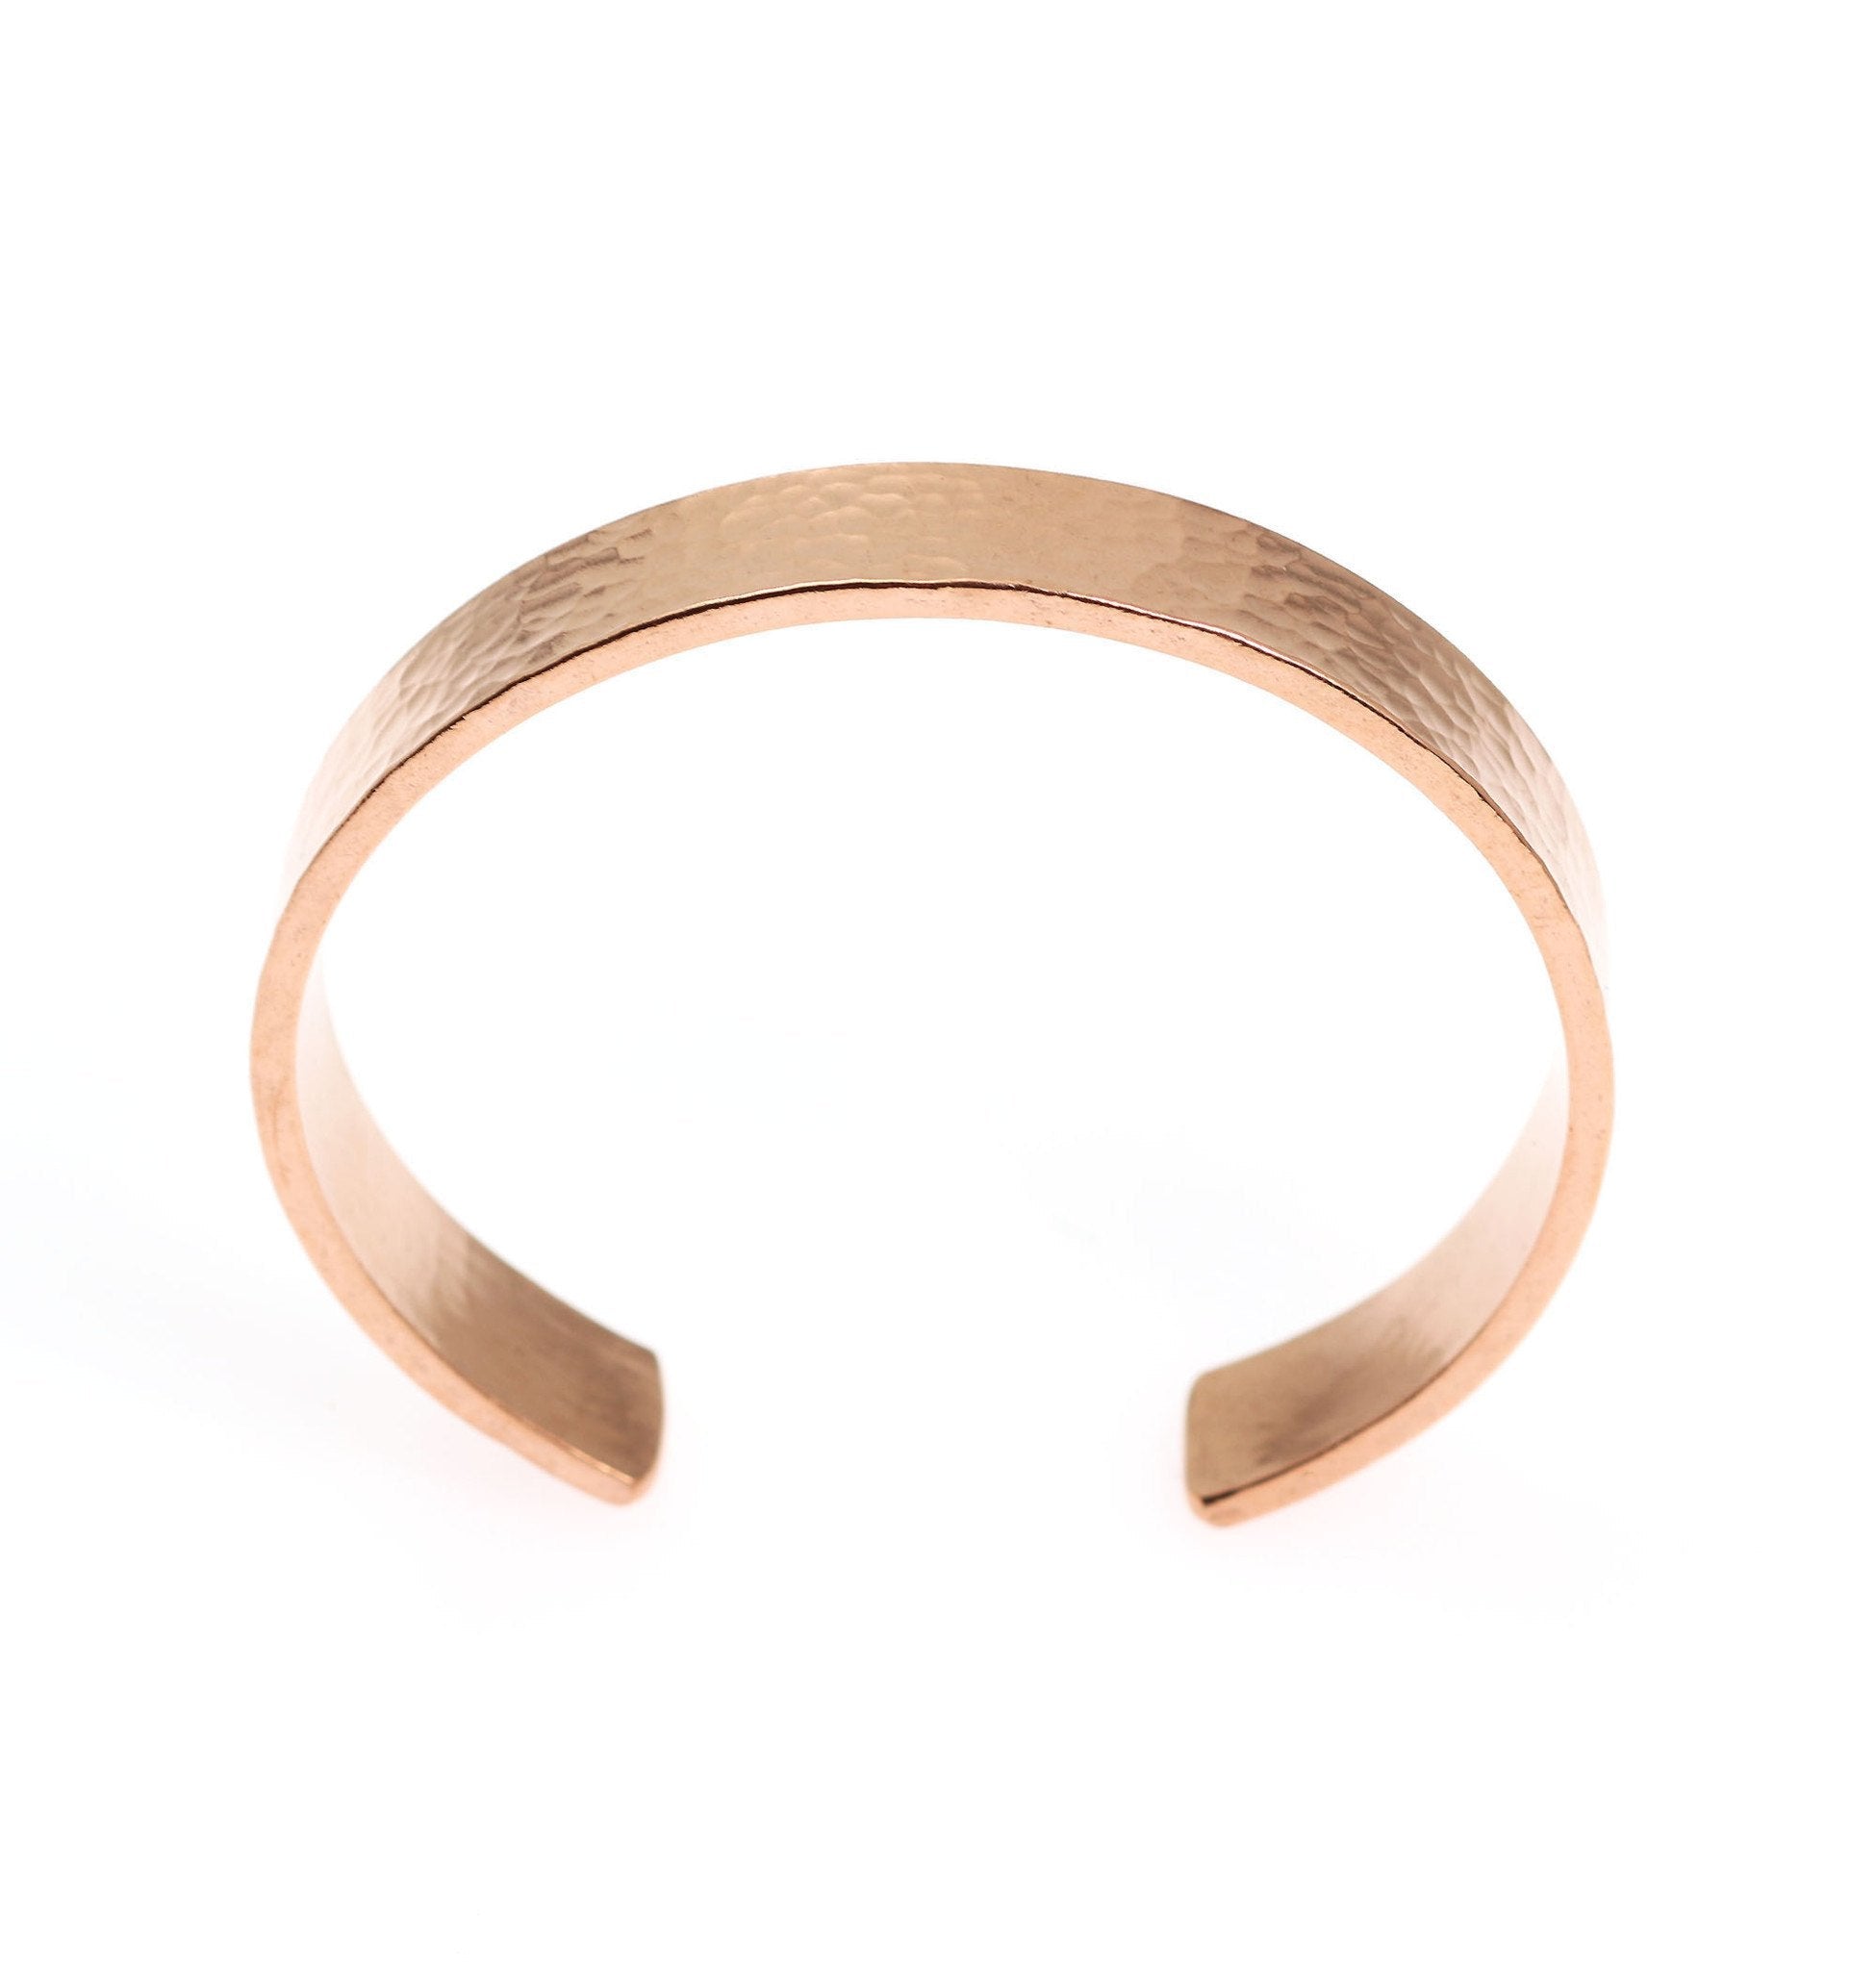 Shape of 10mm Wide Men's Hammered Copper Cuff Bracelet